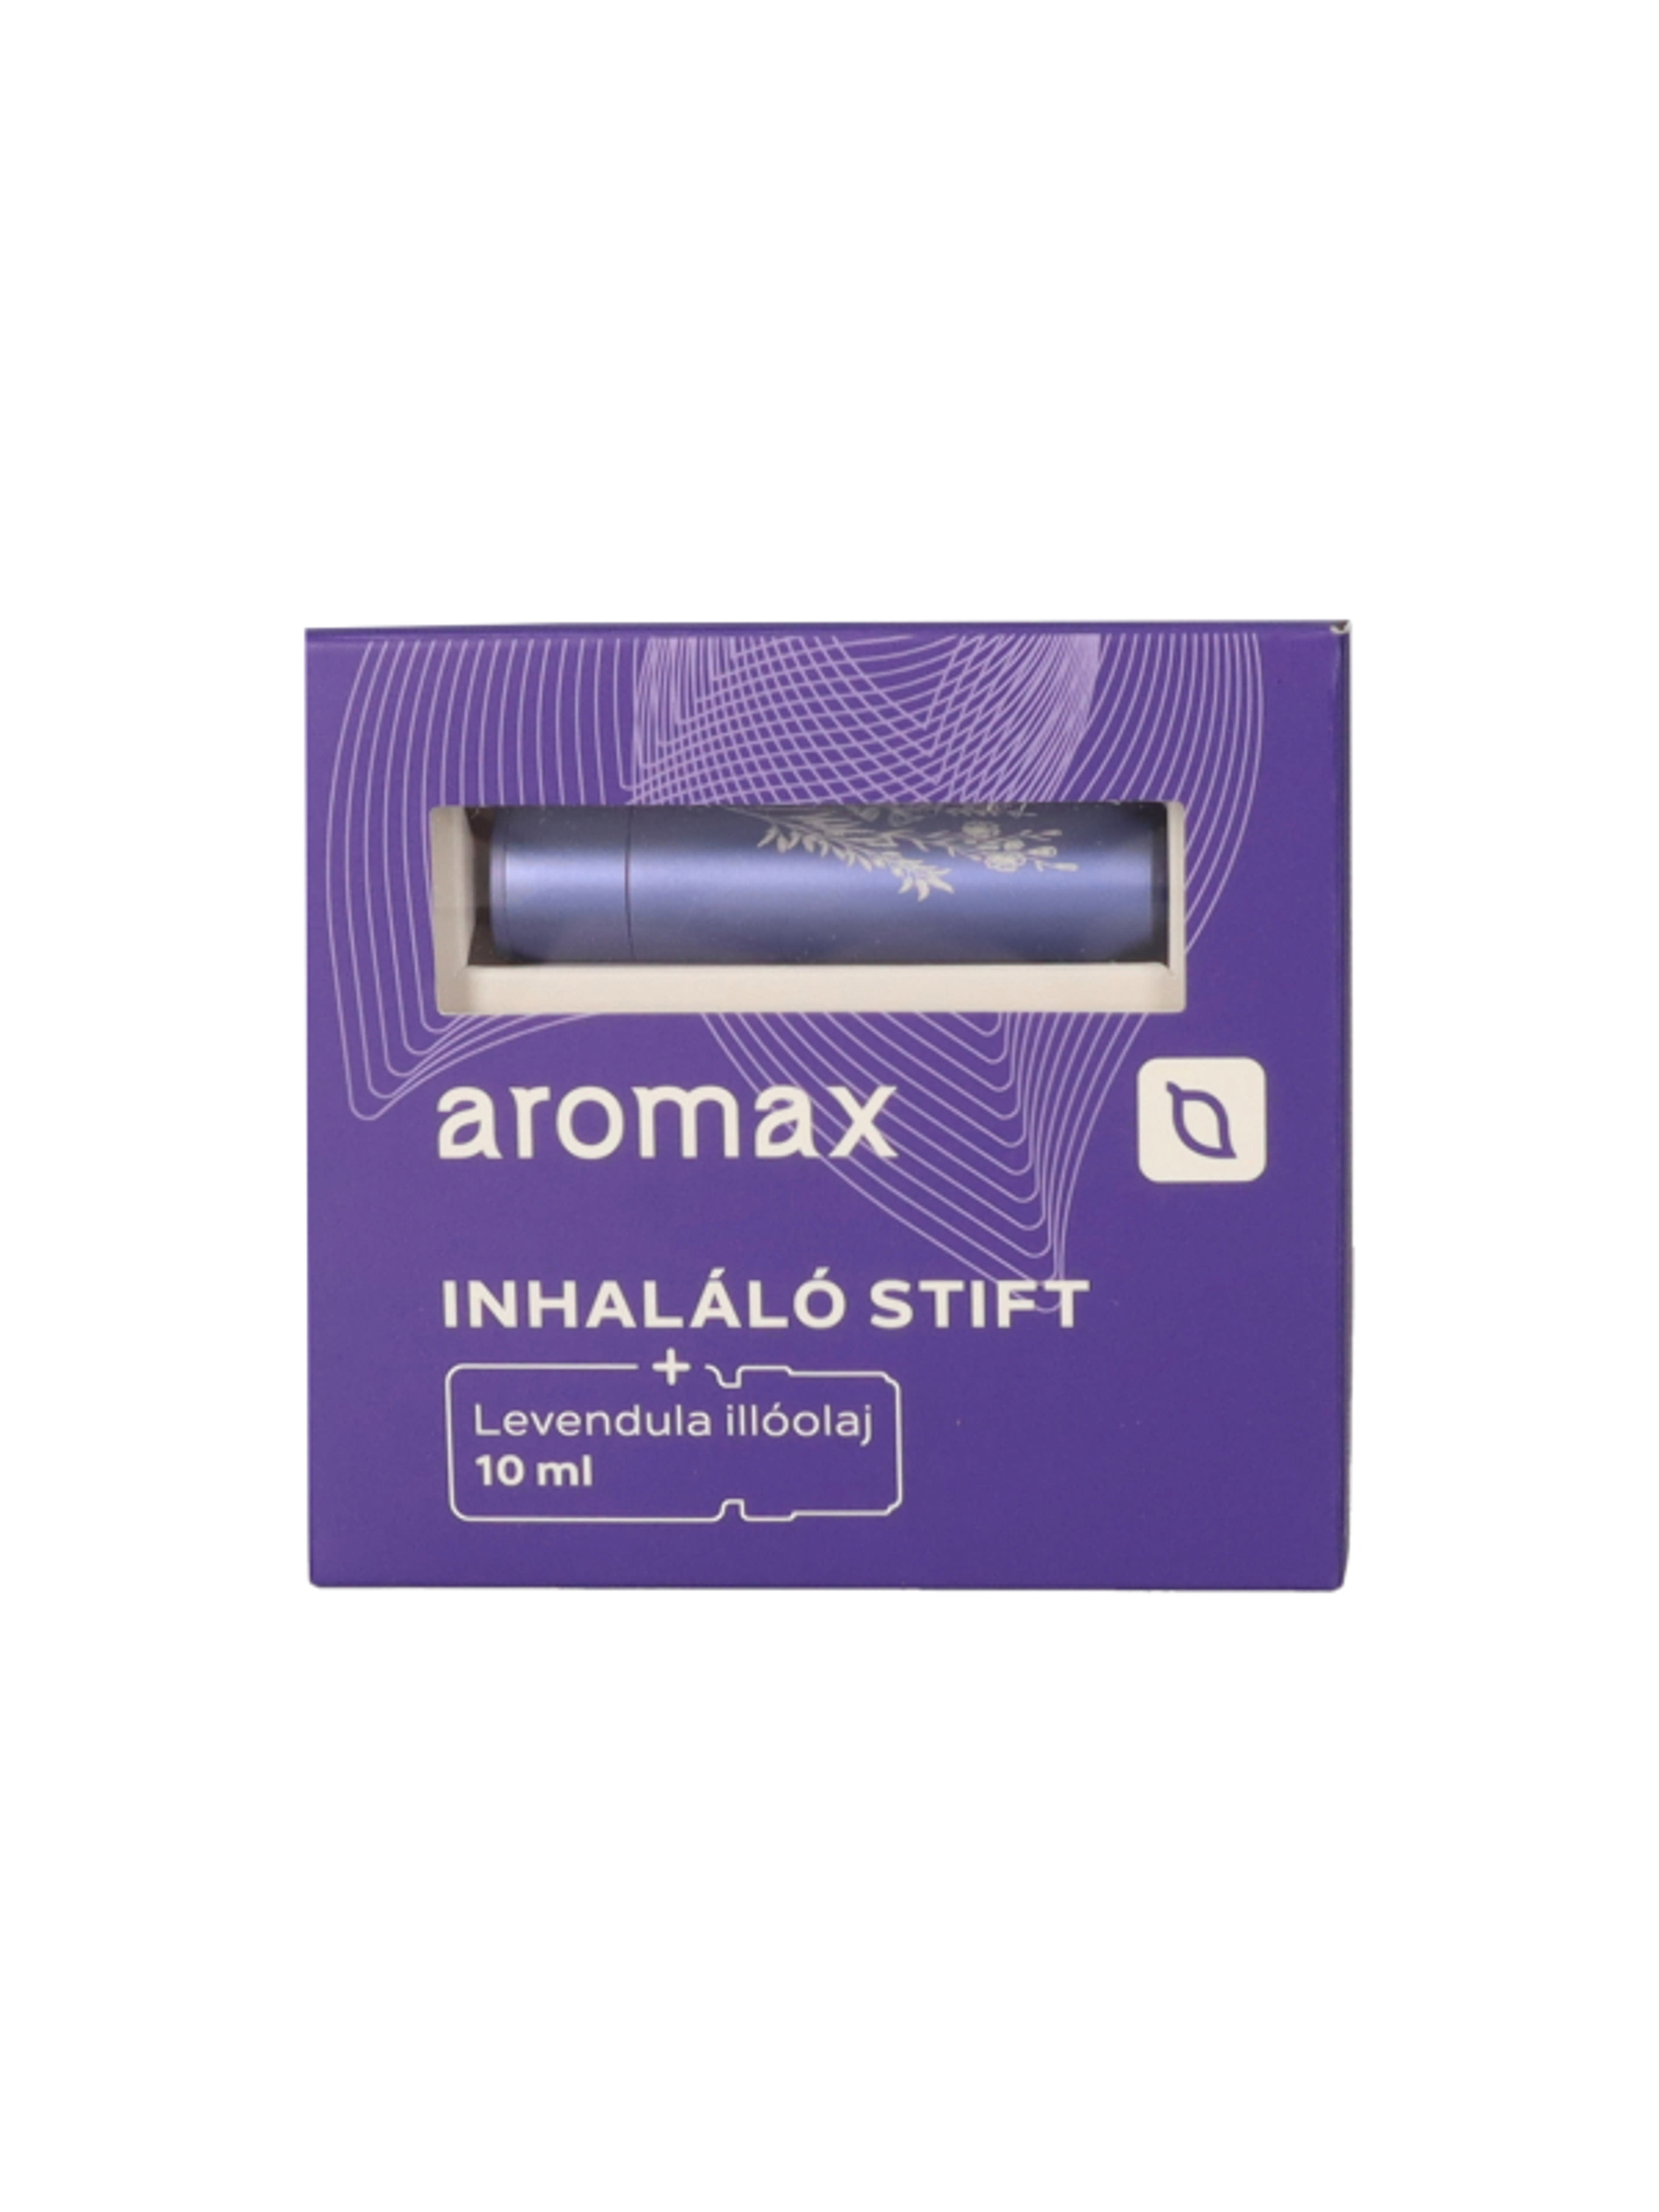 Aromax inhaláló stift, levendula illóolajjal - 1 db-1